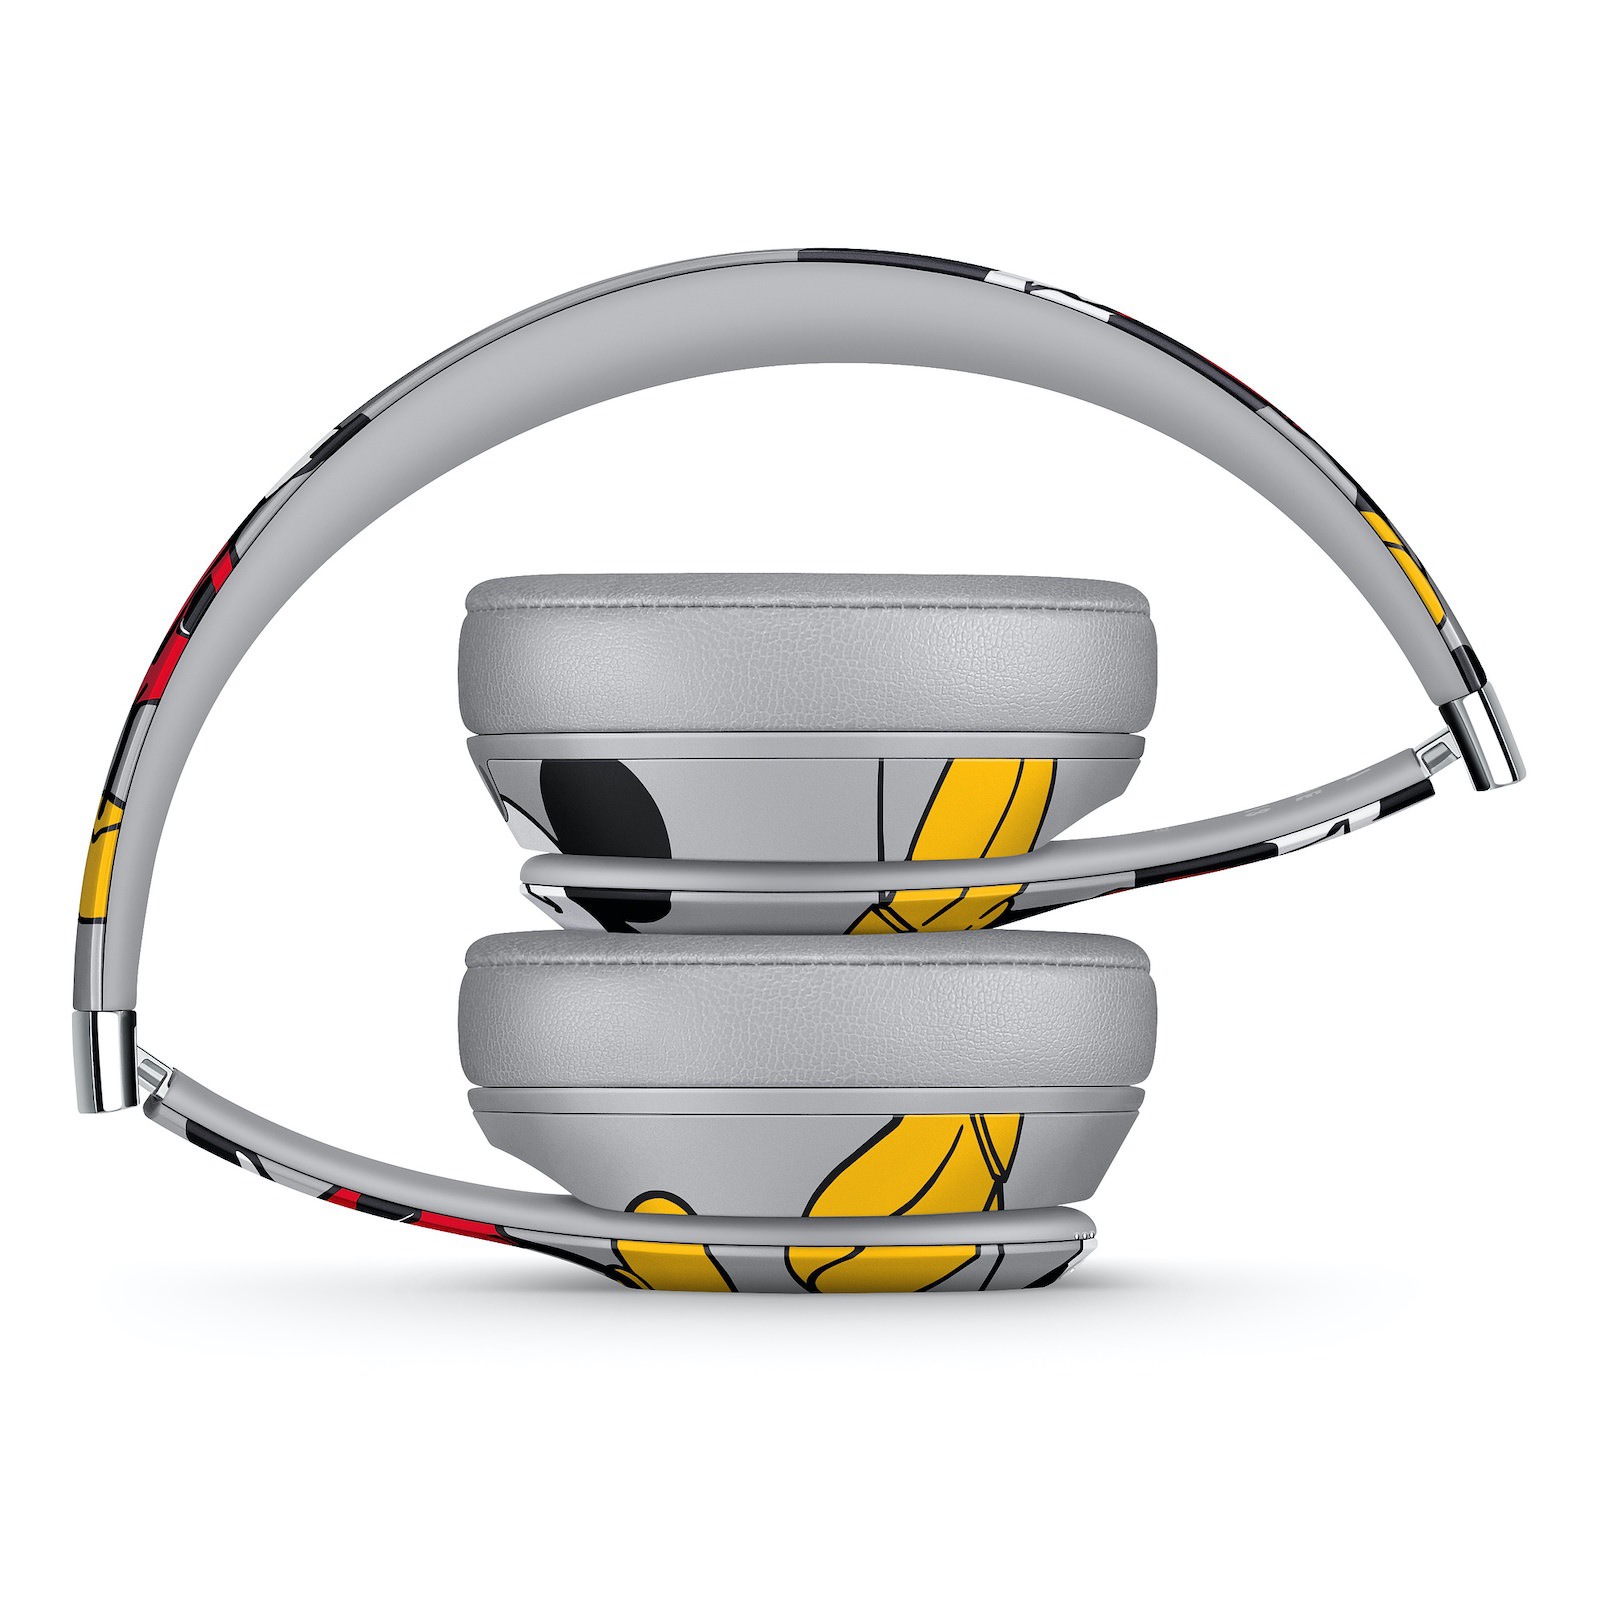 Beats-Solo3-Wireless-Headphones-90-anniversary-model-04.jpeg